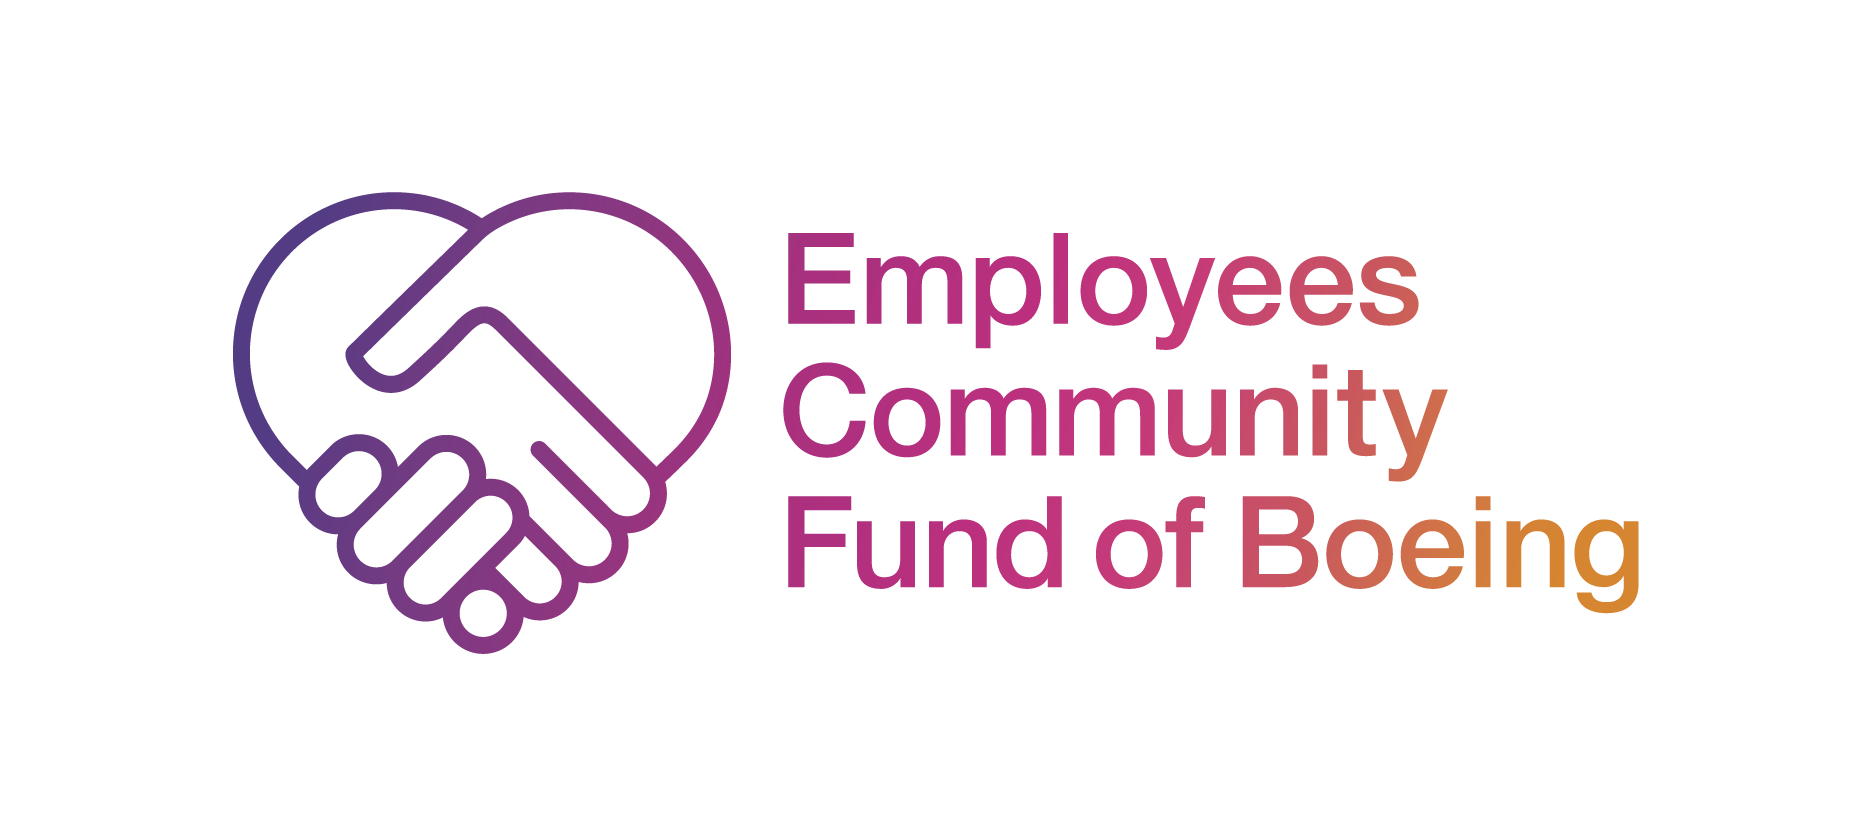 Employees Community Fund of Boeing logo